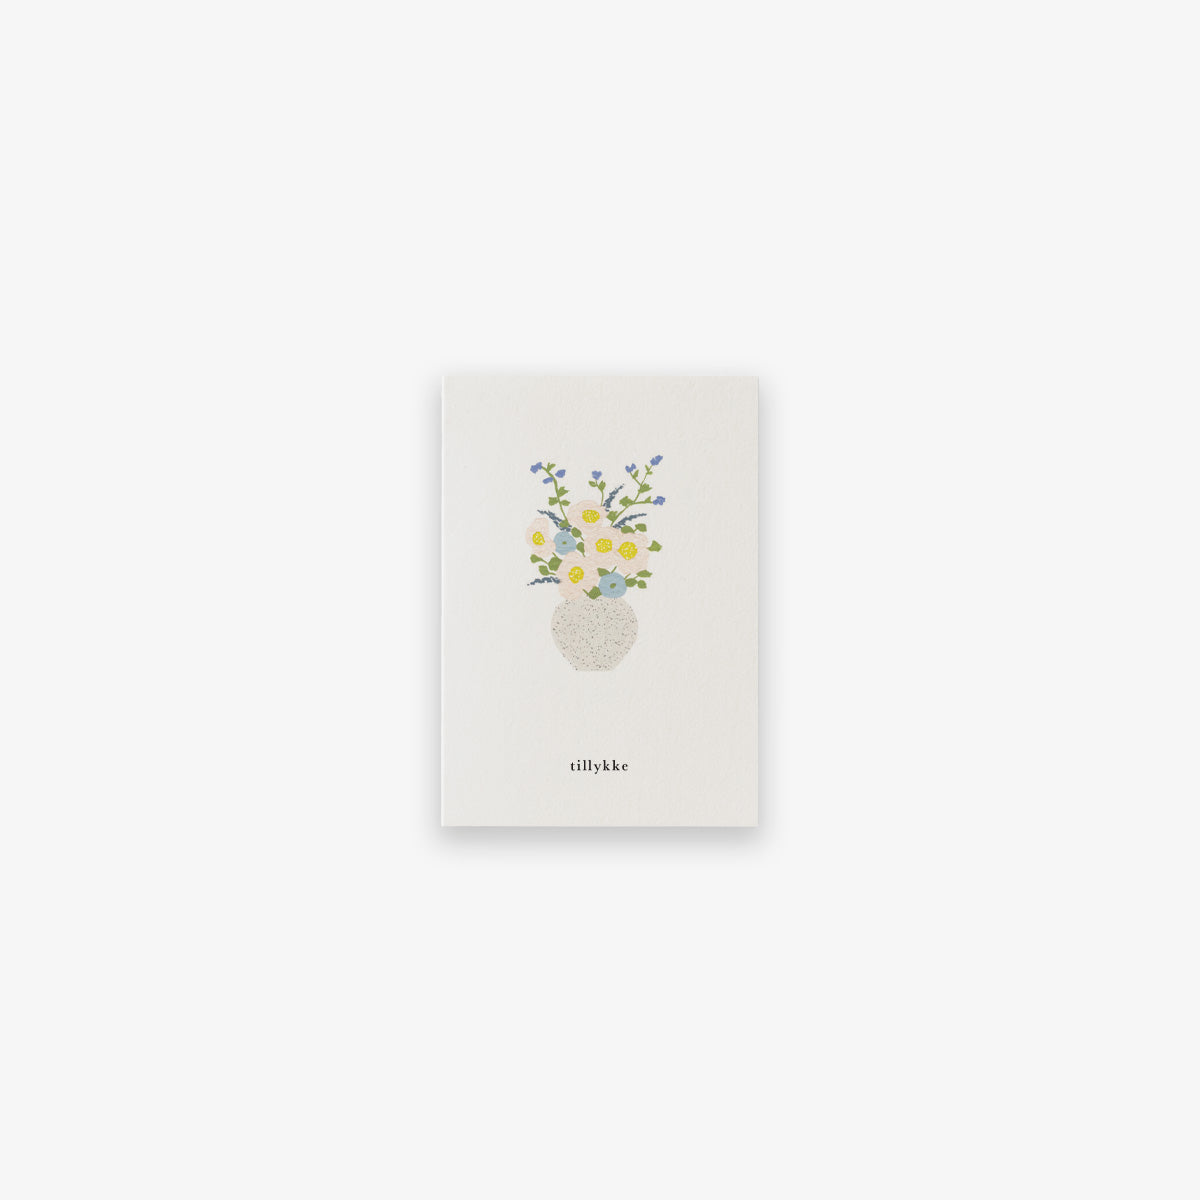 SMALL GREETING CARD // FØDSELSDAGSBLOMSTER (DANISH)